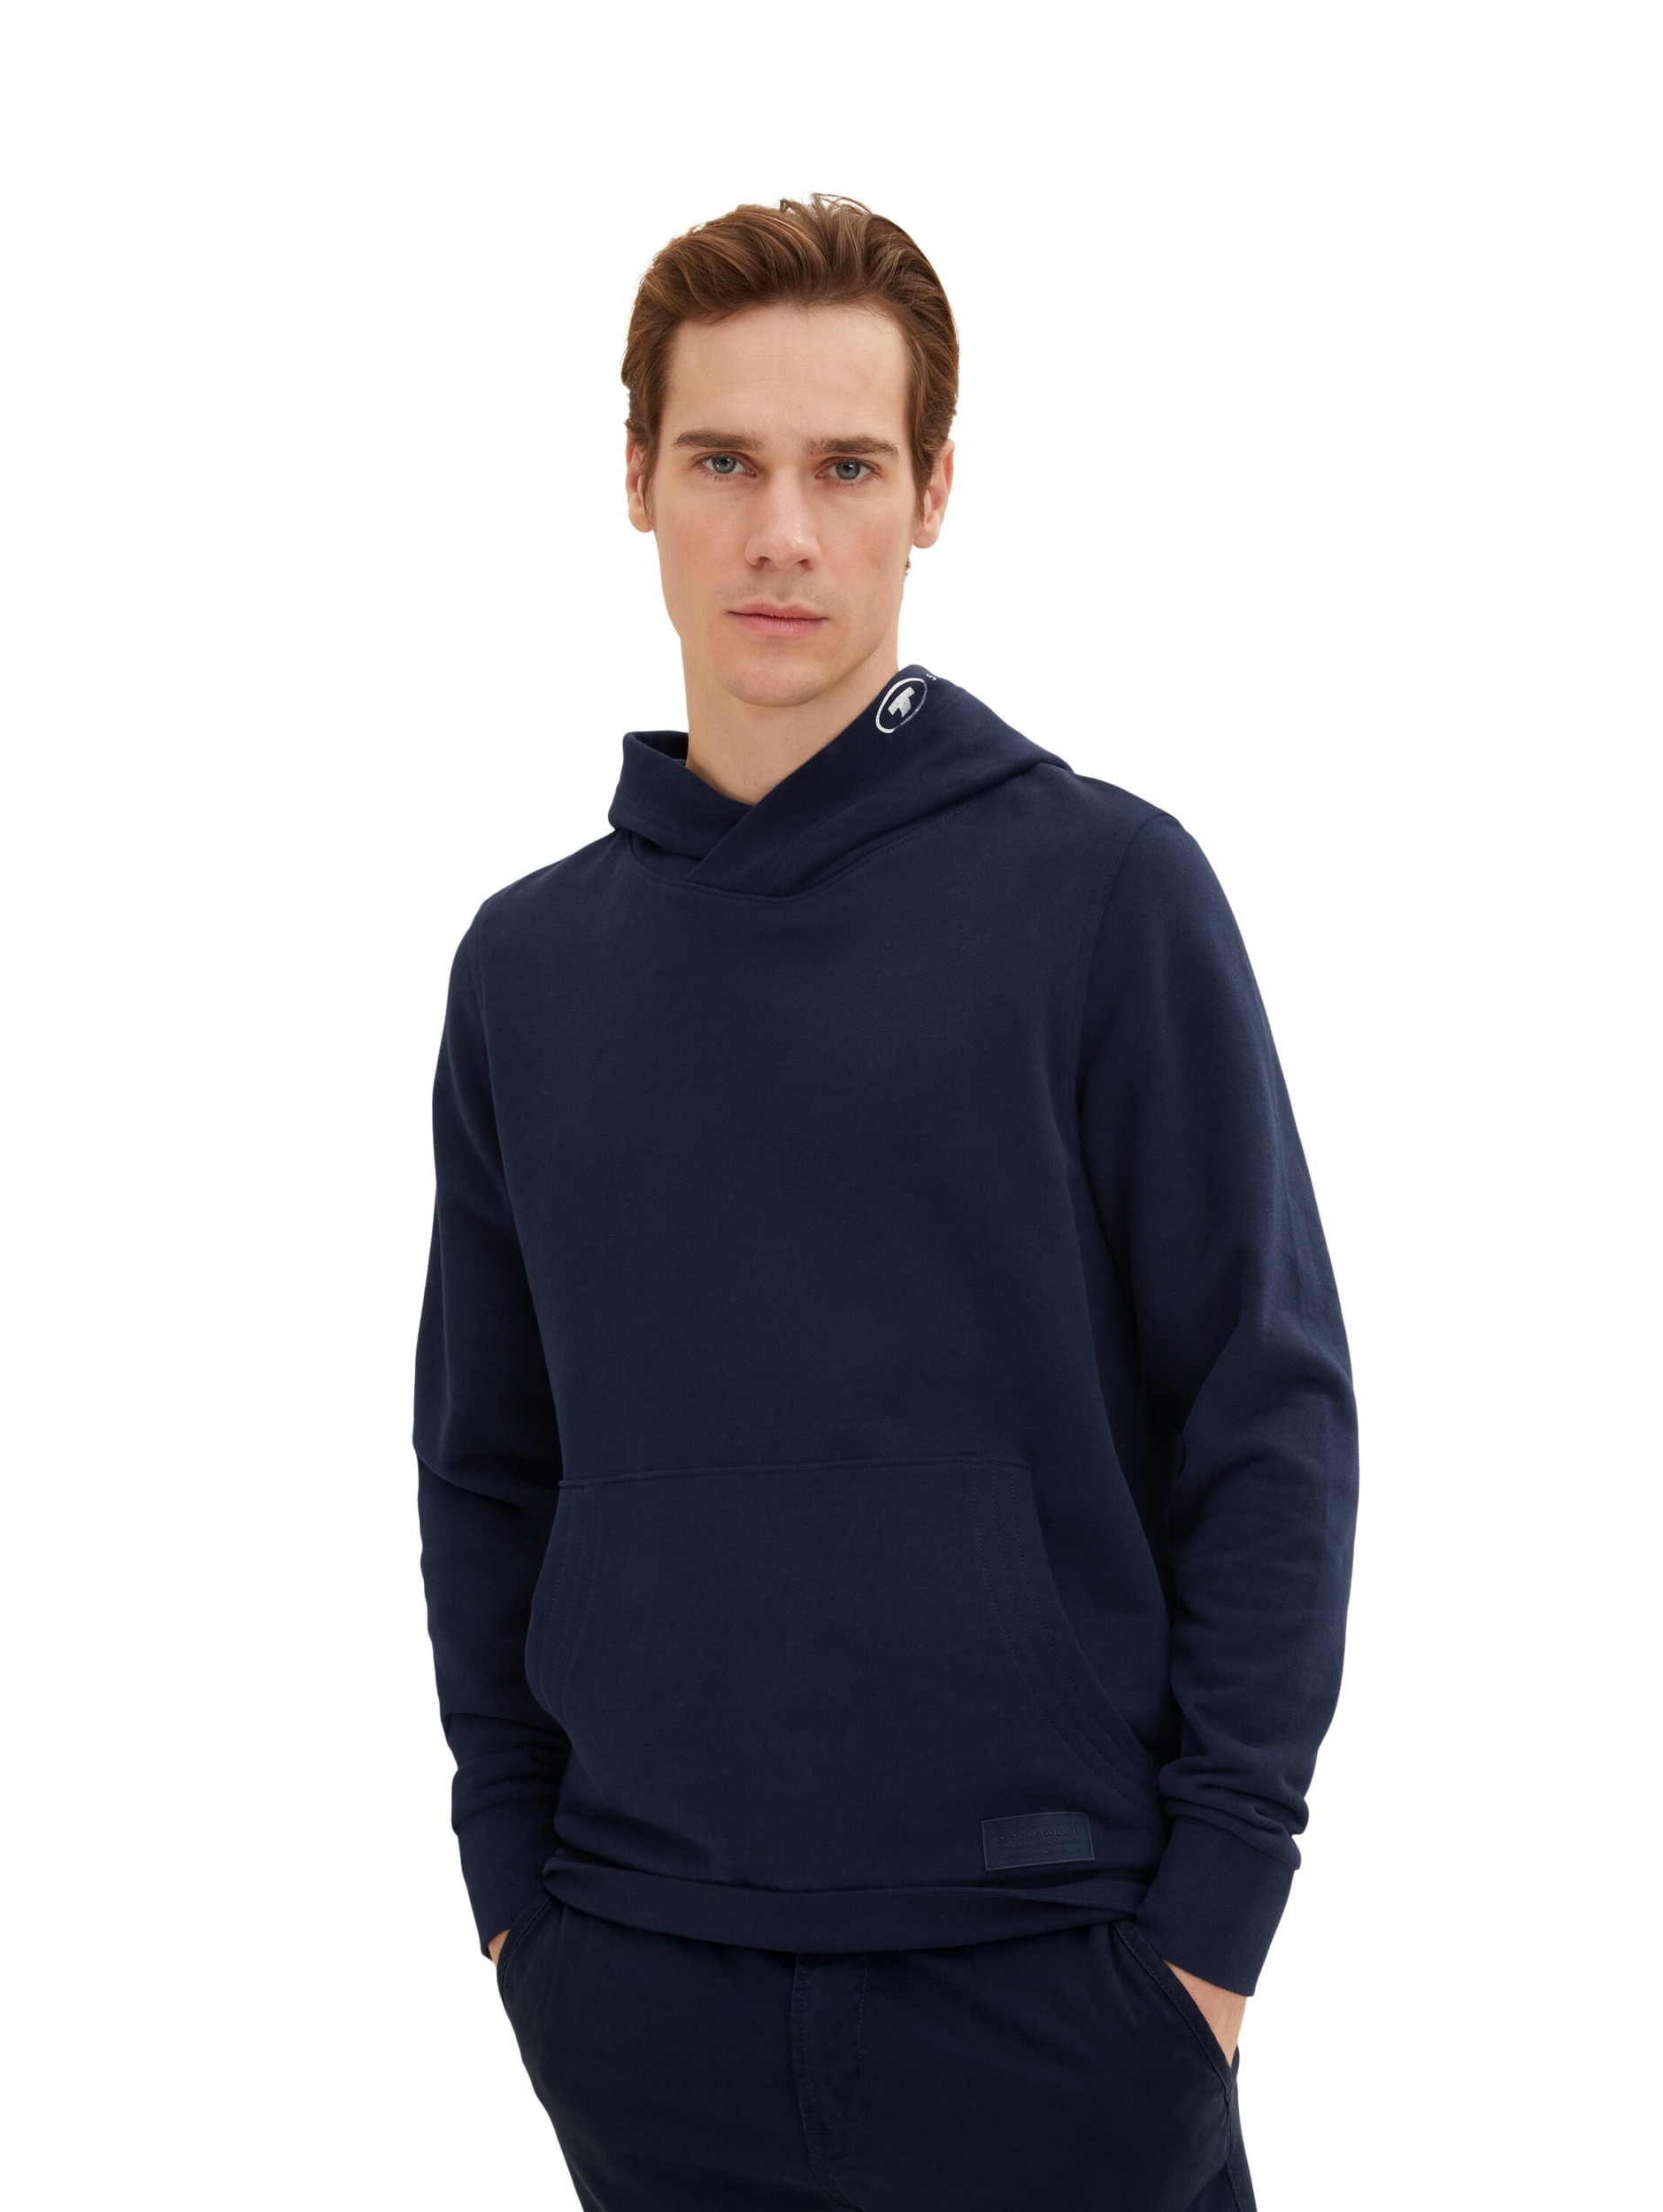 TOM TAILOR hoodie with structur online kaufen